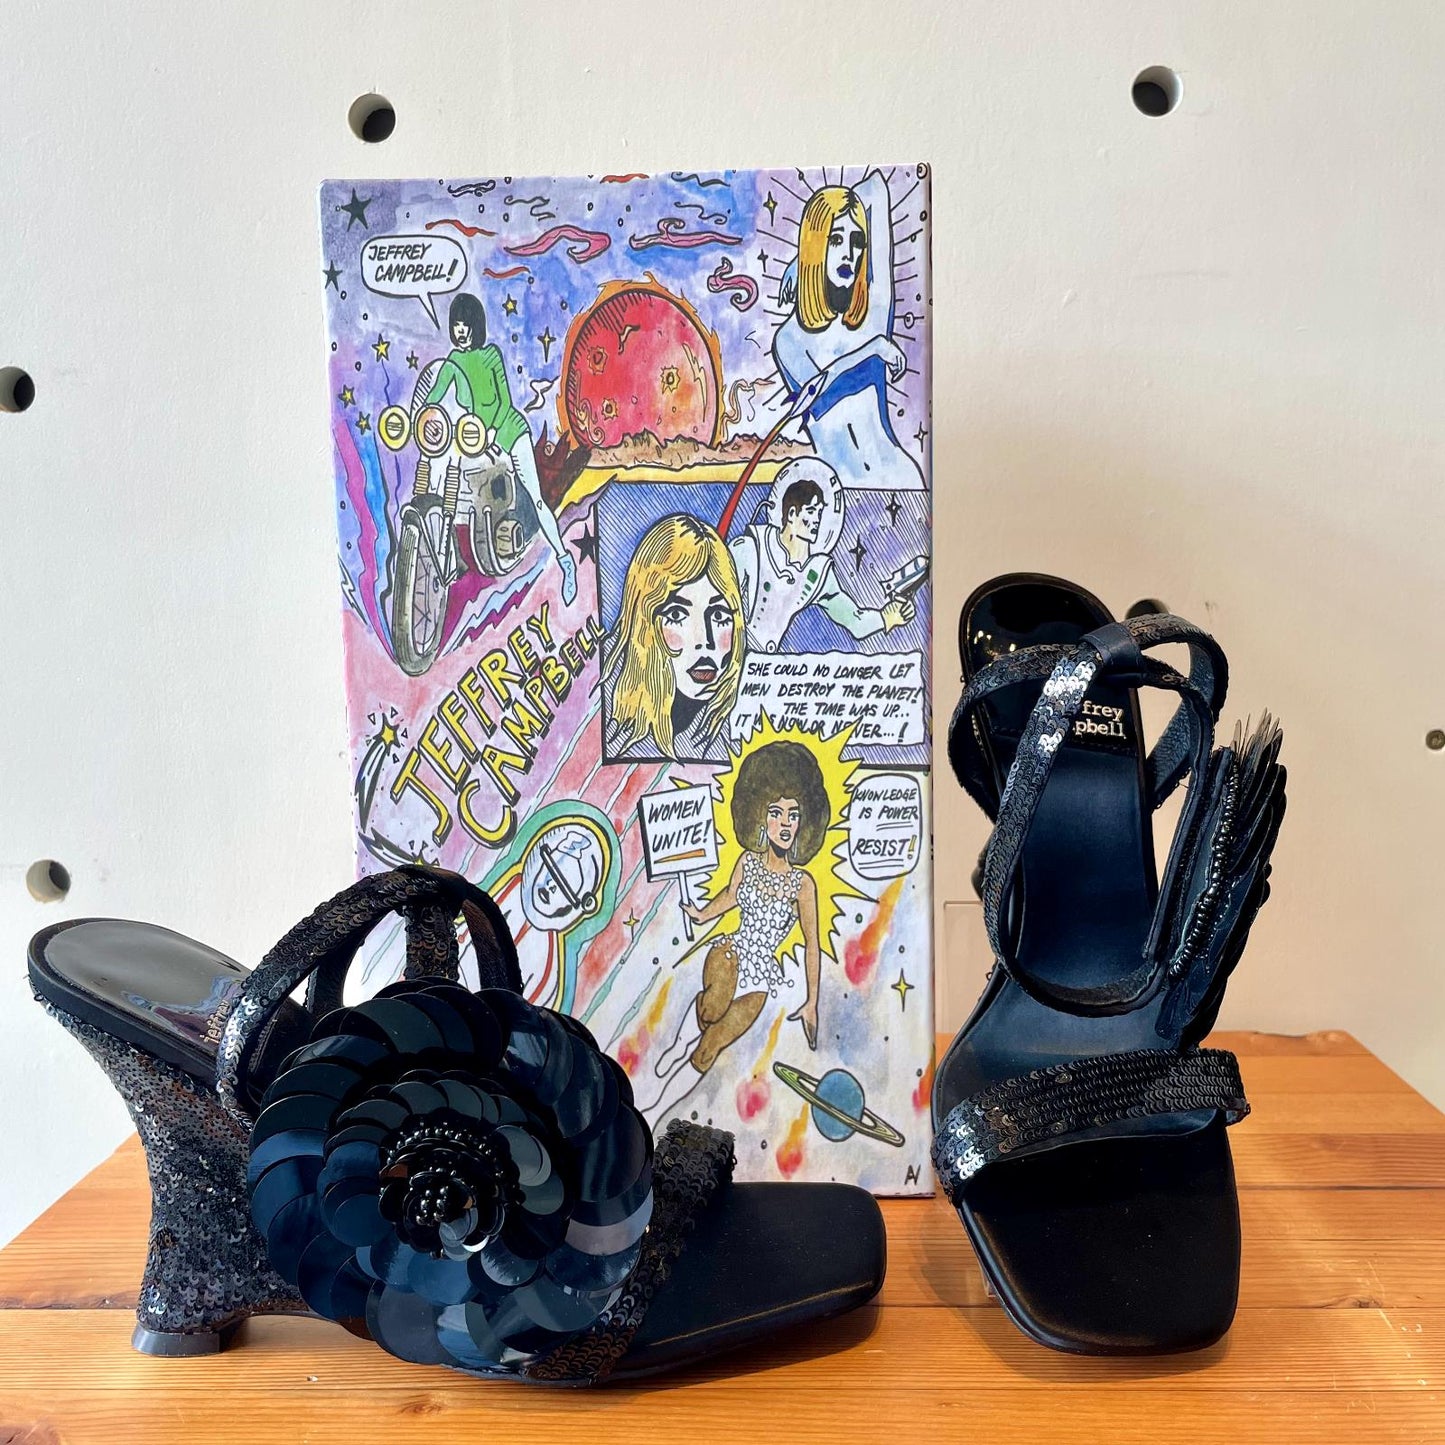 7 - Jeffrey Campbell $210 Black Sequin Floraline Heels Shoes NEW w/ Box 0716MD